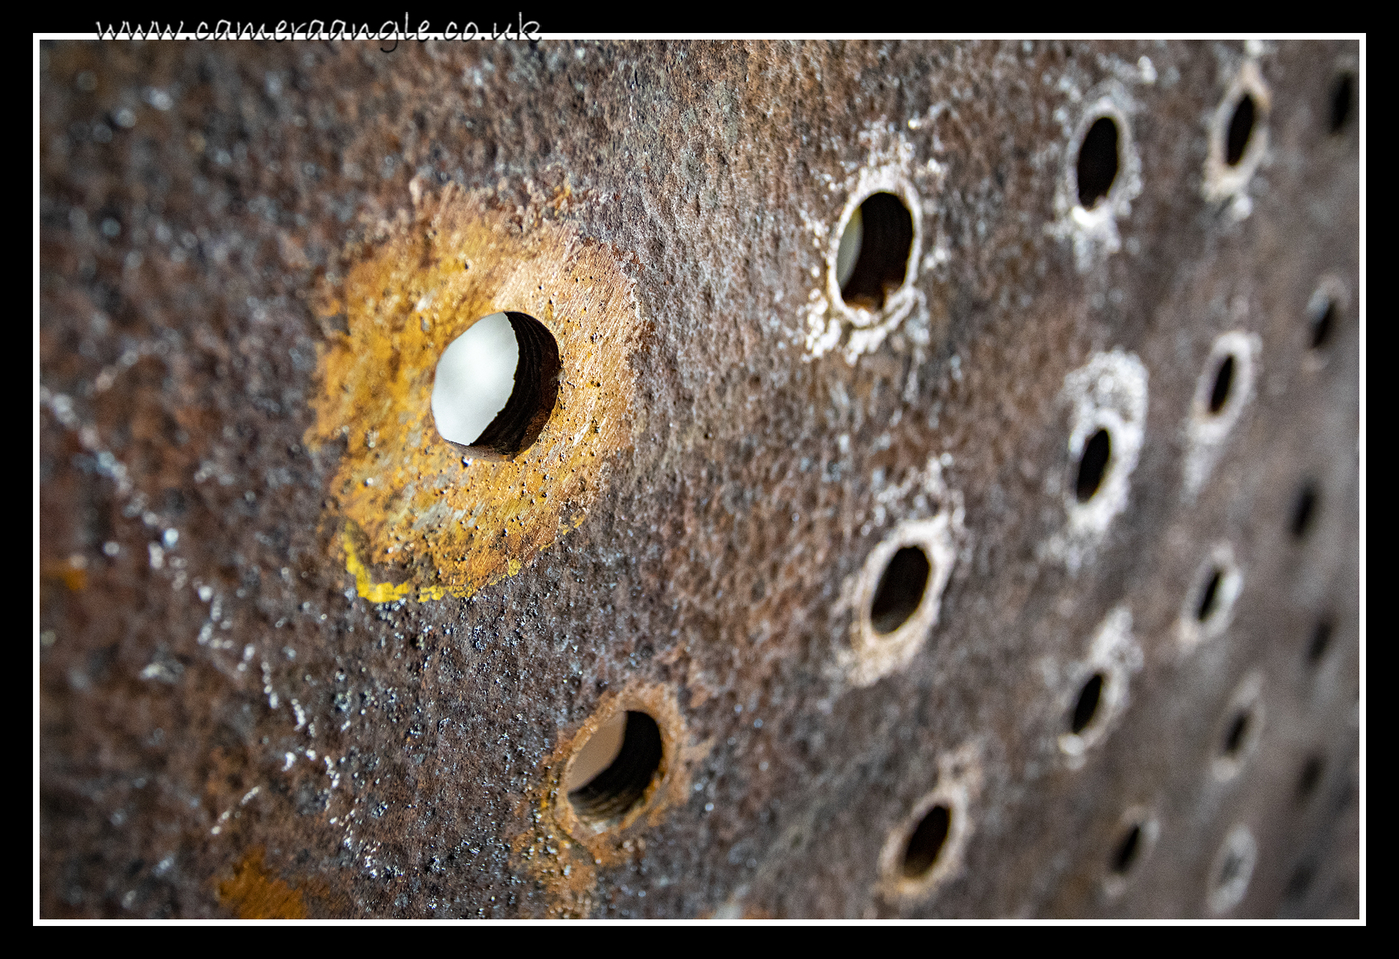 Rusty Holes
Keywords: Rusty Holes